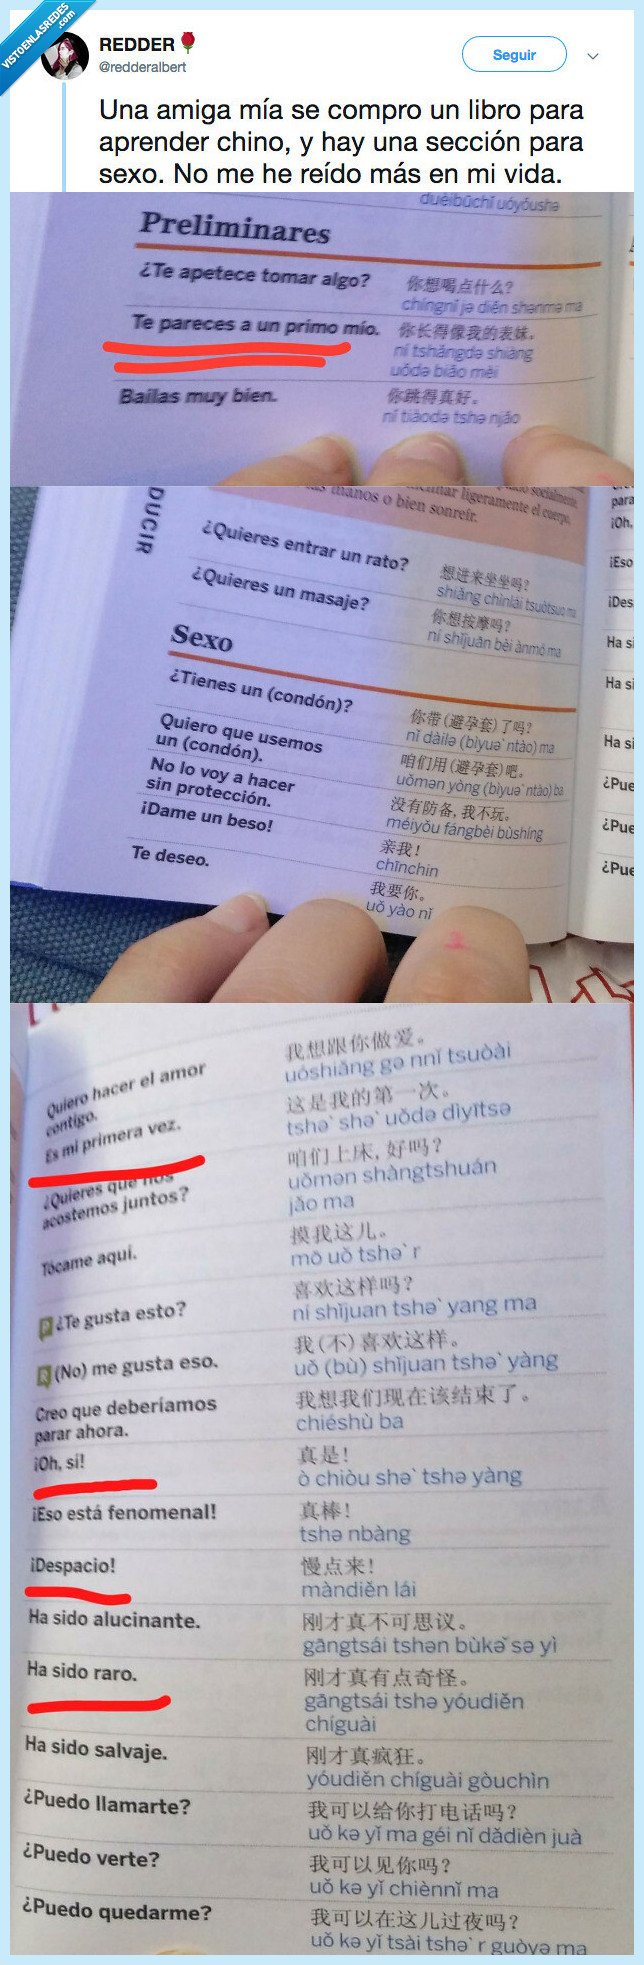 507287 - Se compra un libro de chino y enseña las frases que le recomiendapara chuscar, por @redderalbert